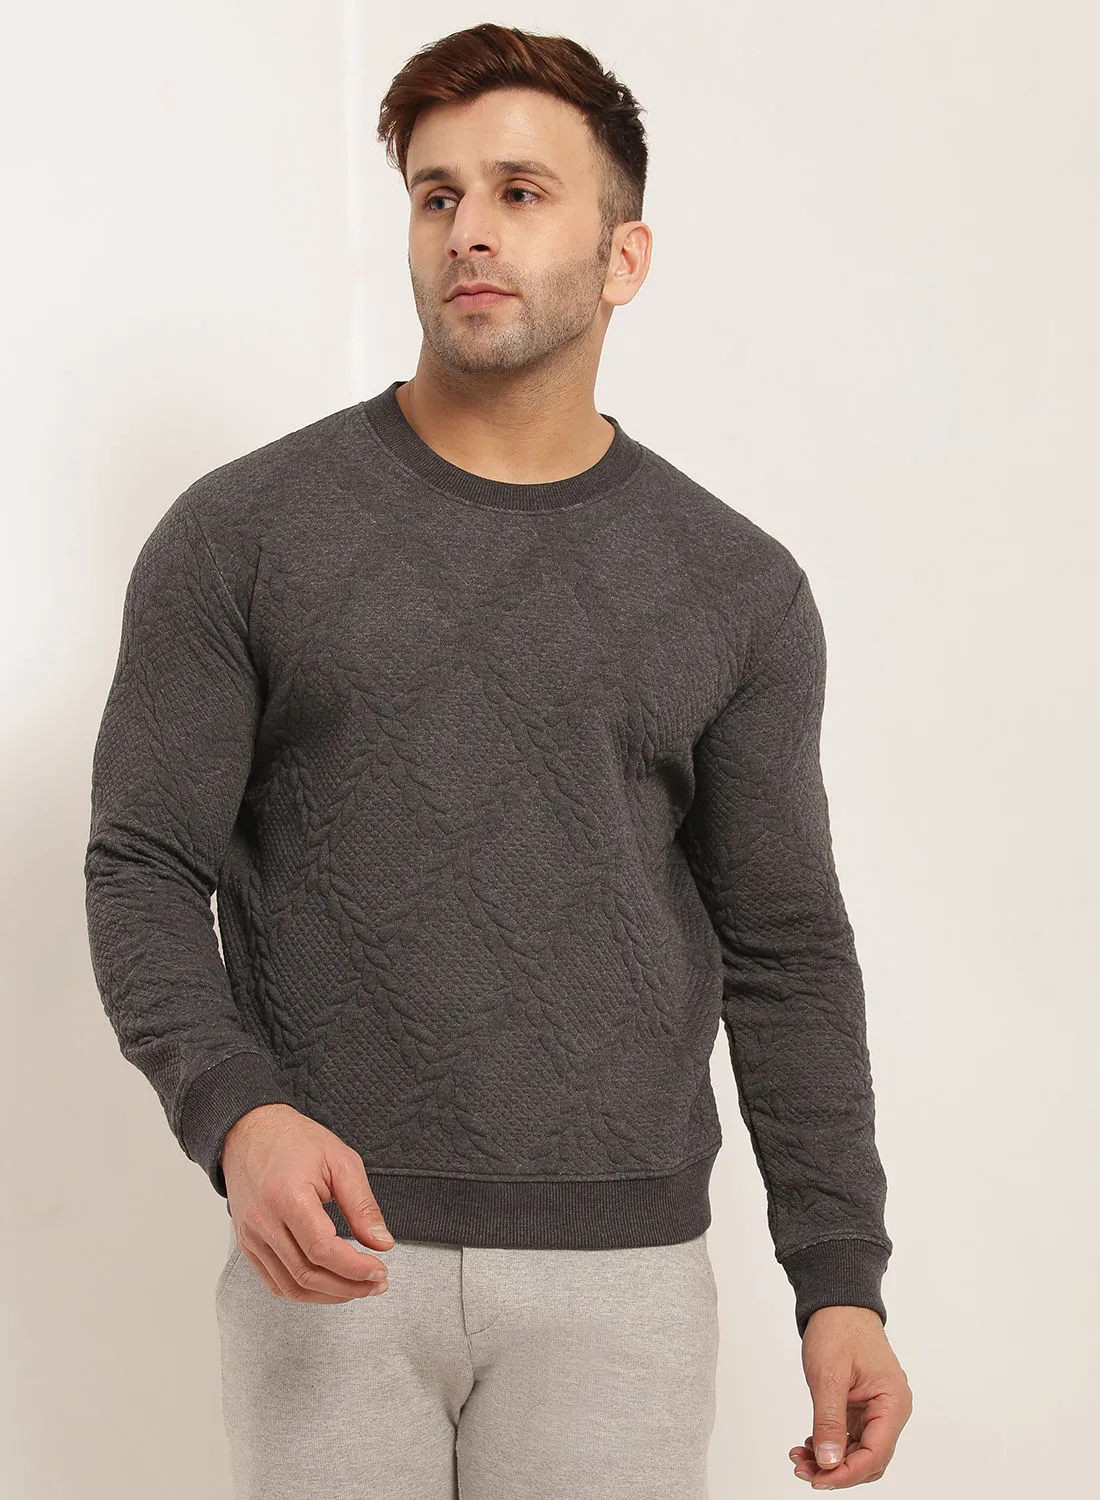 QUWA Men's Embossed Effect Round Neck Sweatshirt Grey